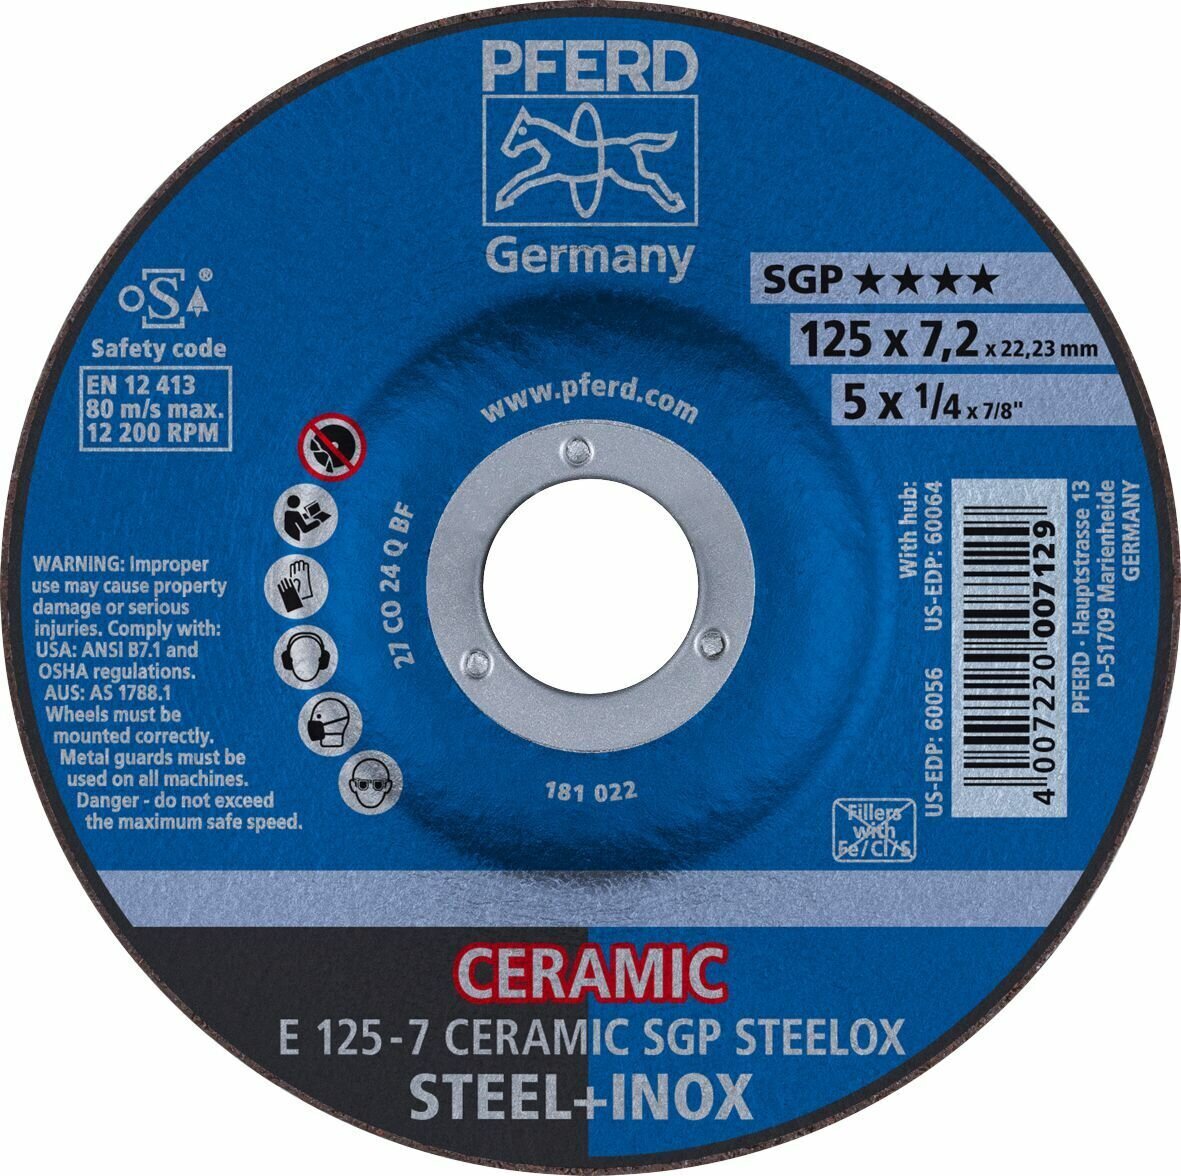 PREMIUM CERAMIC GRINDING WHEEL D/C - INOX / STEEL 125MM